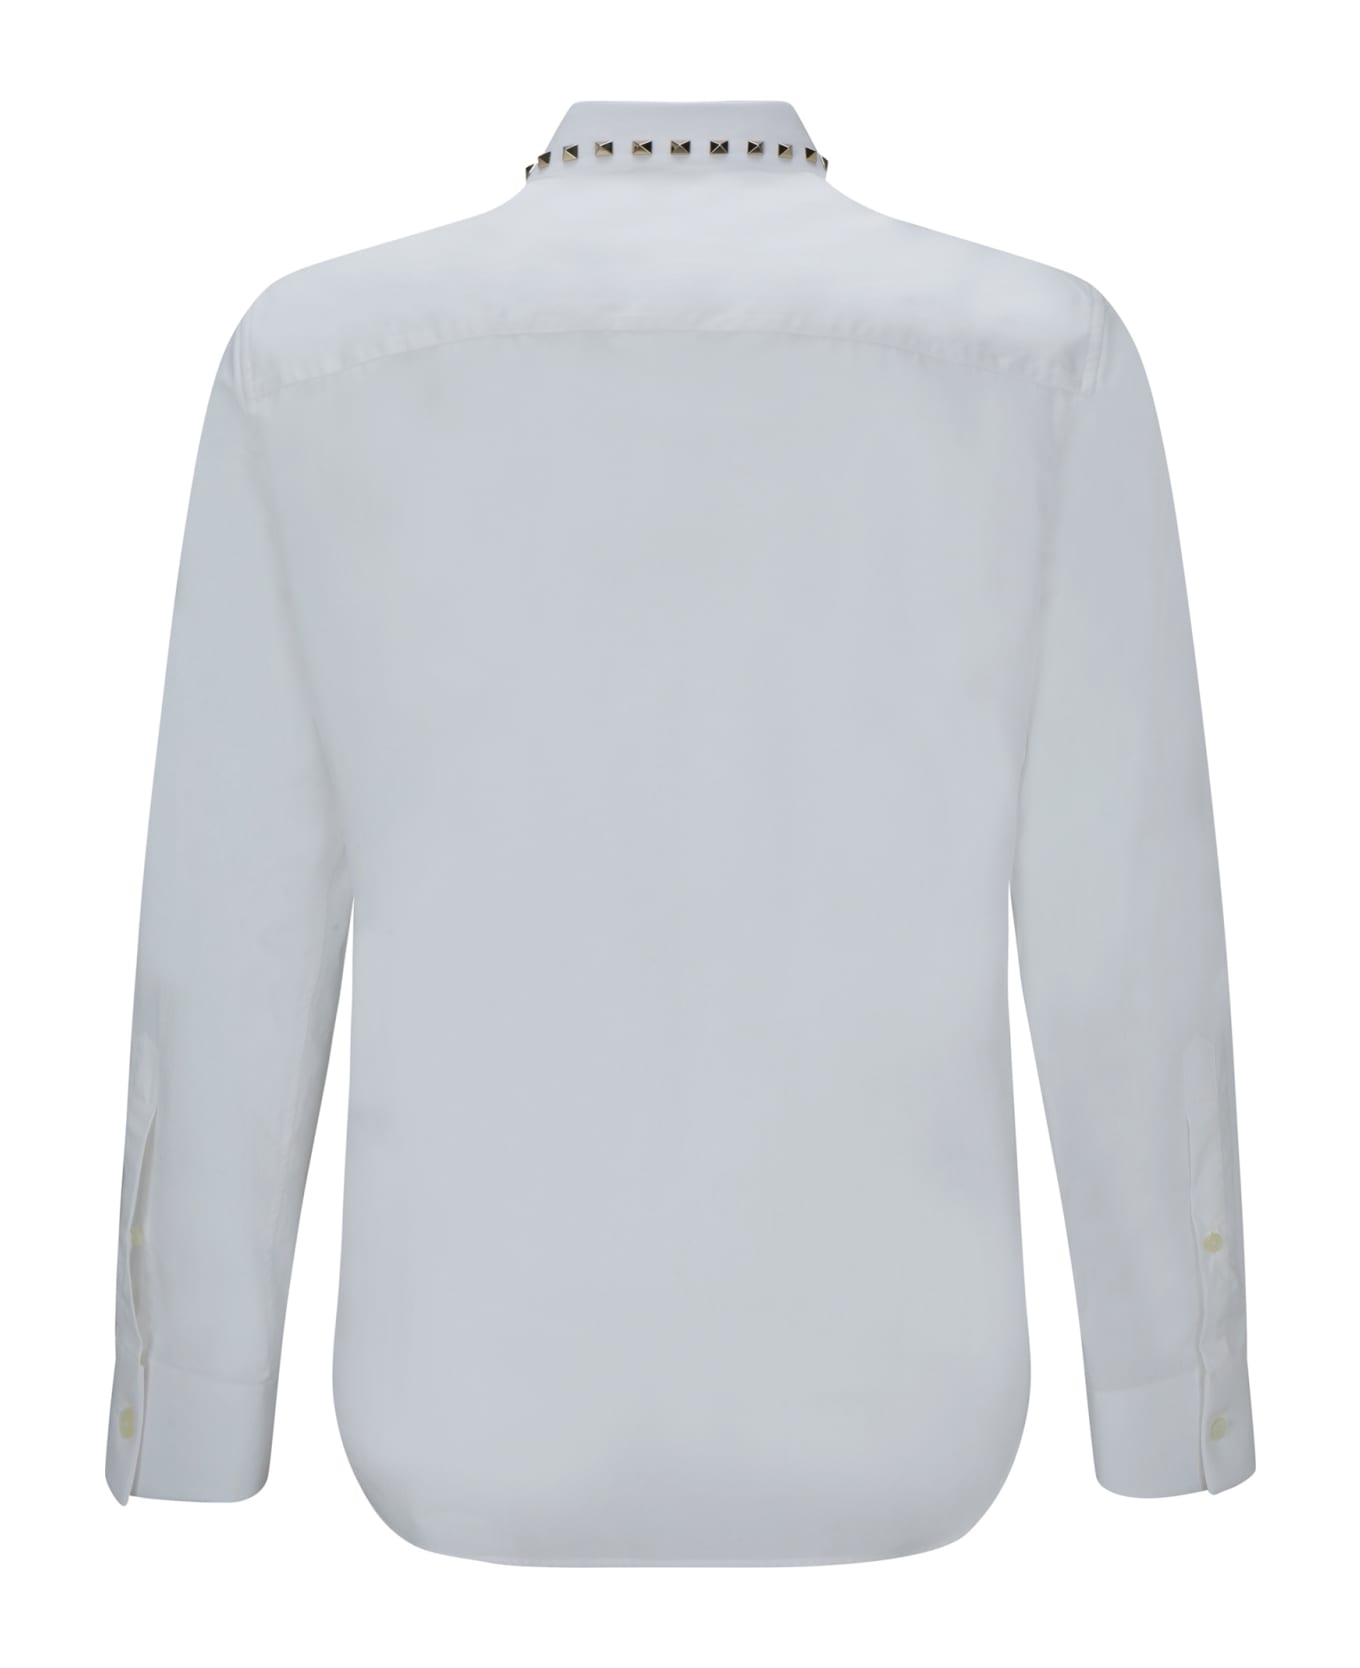 Valentino Garavani Rockstud Shirt - Bianco シャツ